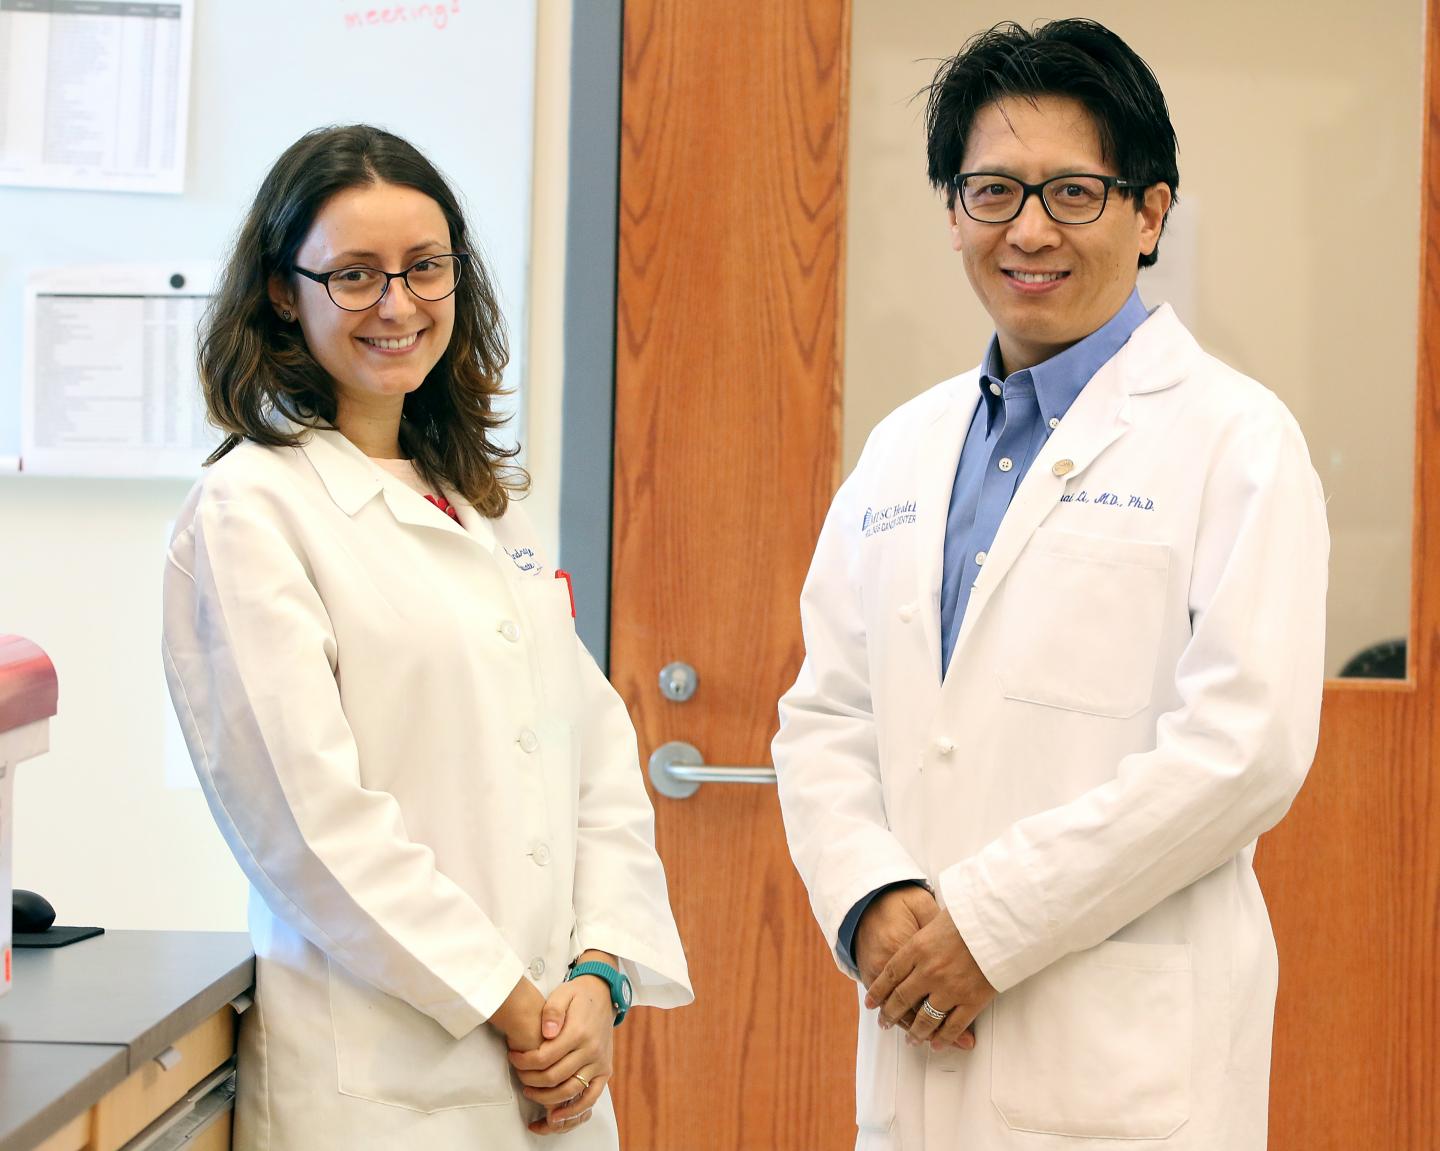 Alessandra Metelli (left) and Dr. Zihai Li (right), Medical University of South Carolina